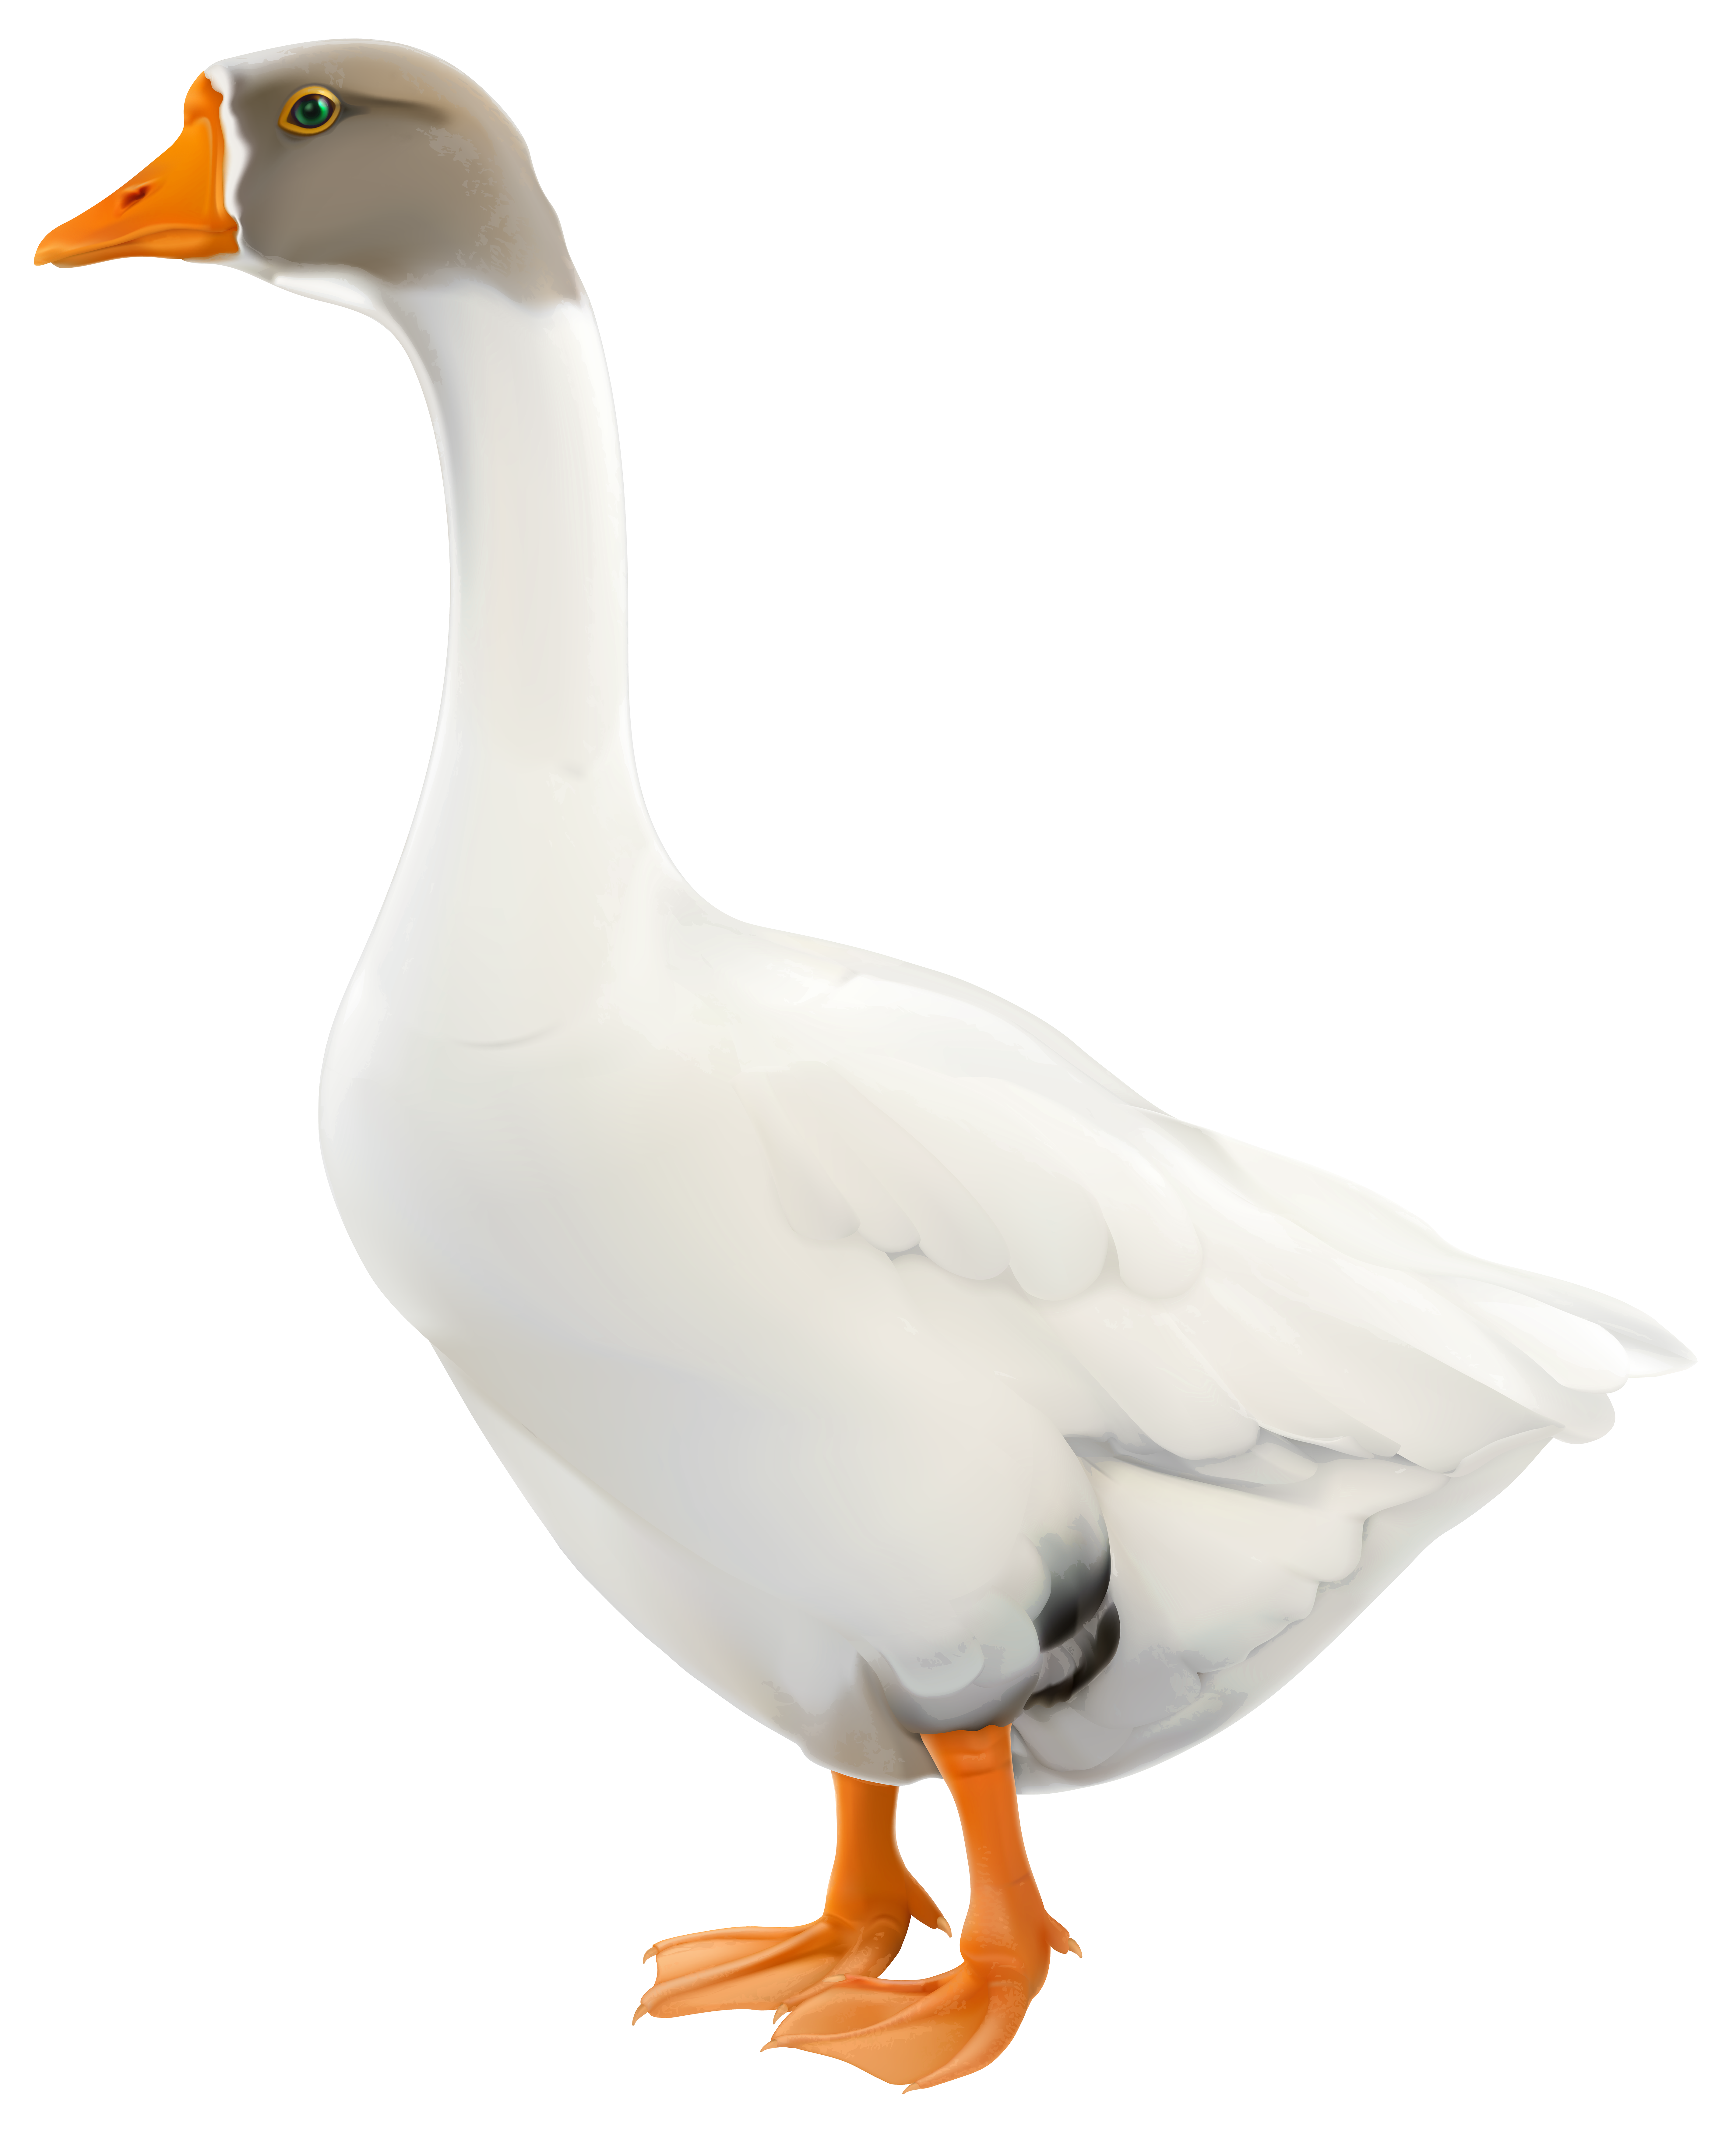 goose goose duck free download